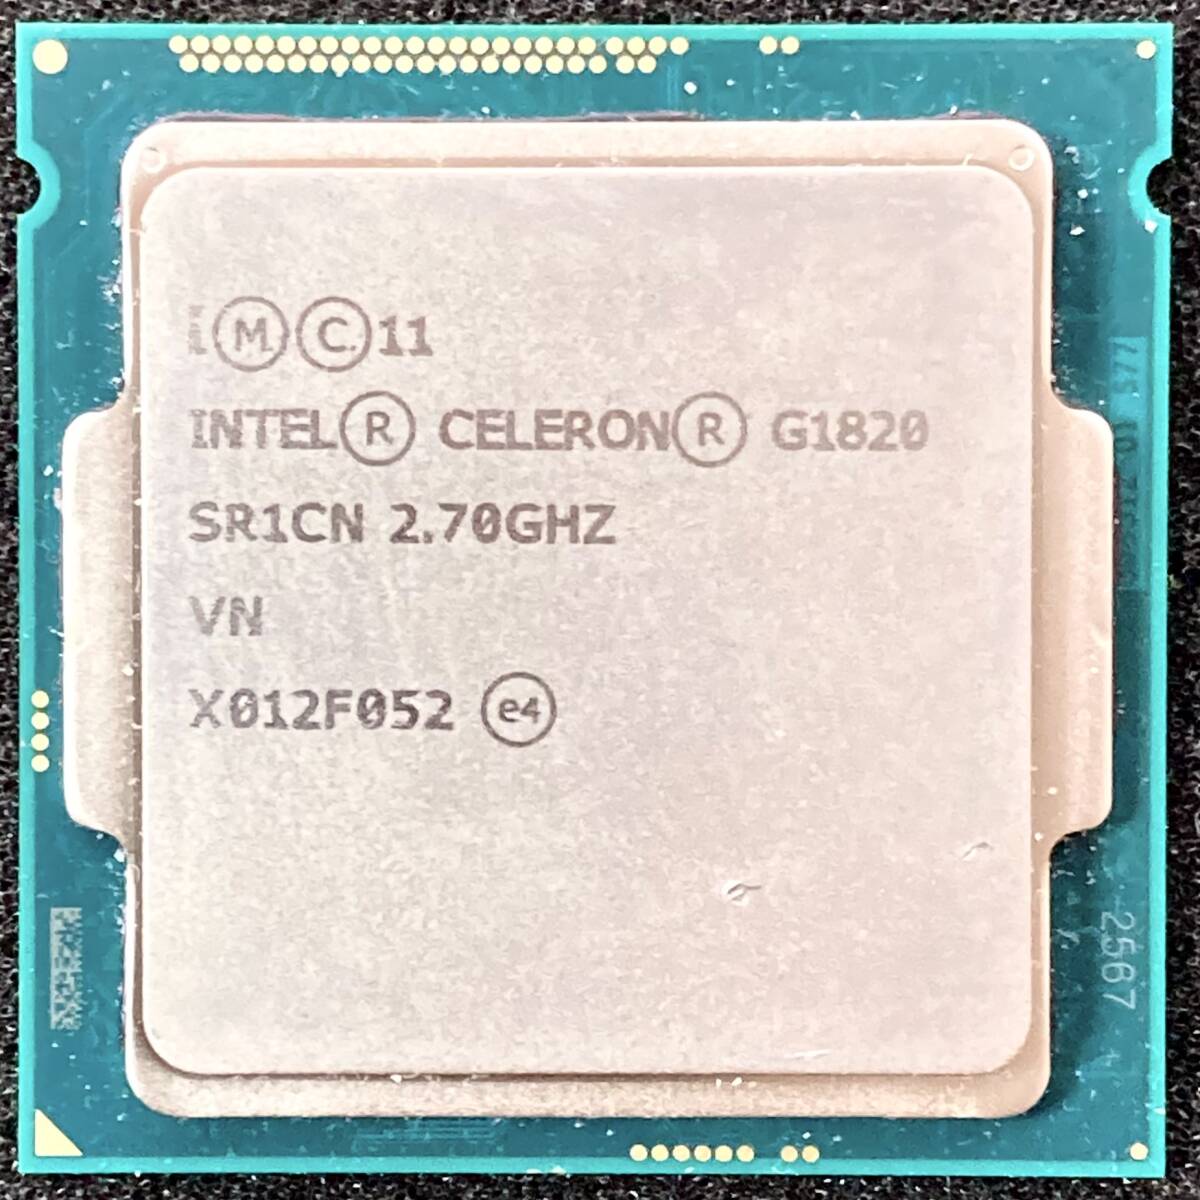 Intel Celeron G1820 processor (Haswell), 2.7GHz, 2 core 2s red, FCLGA1150, SR1CN